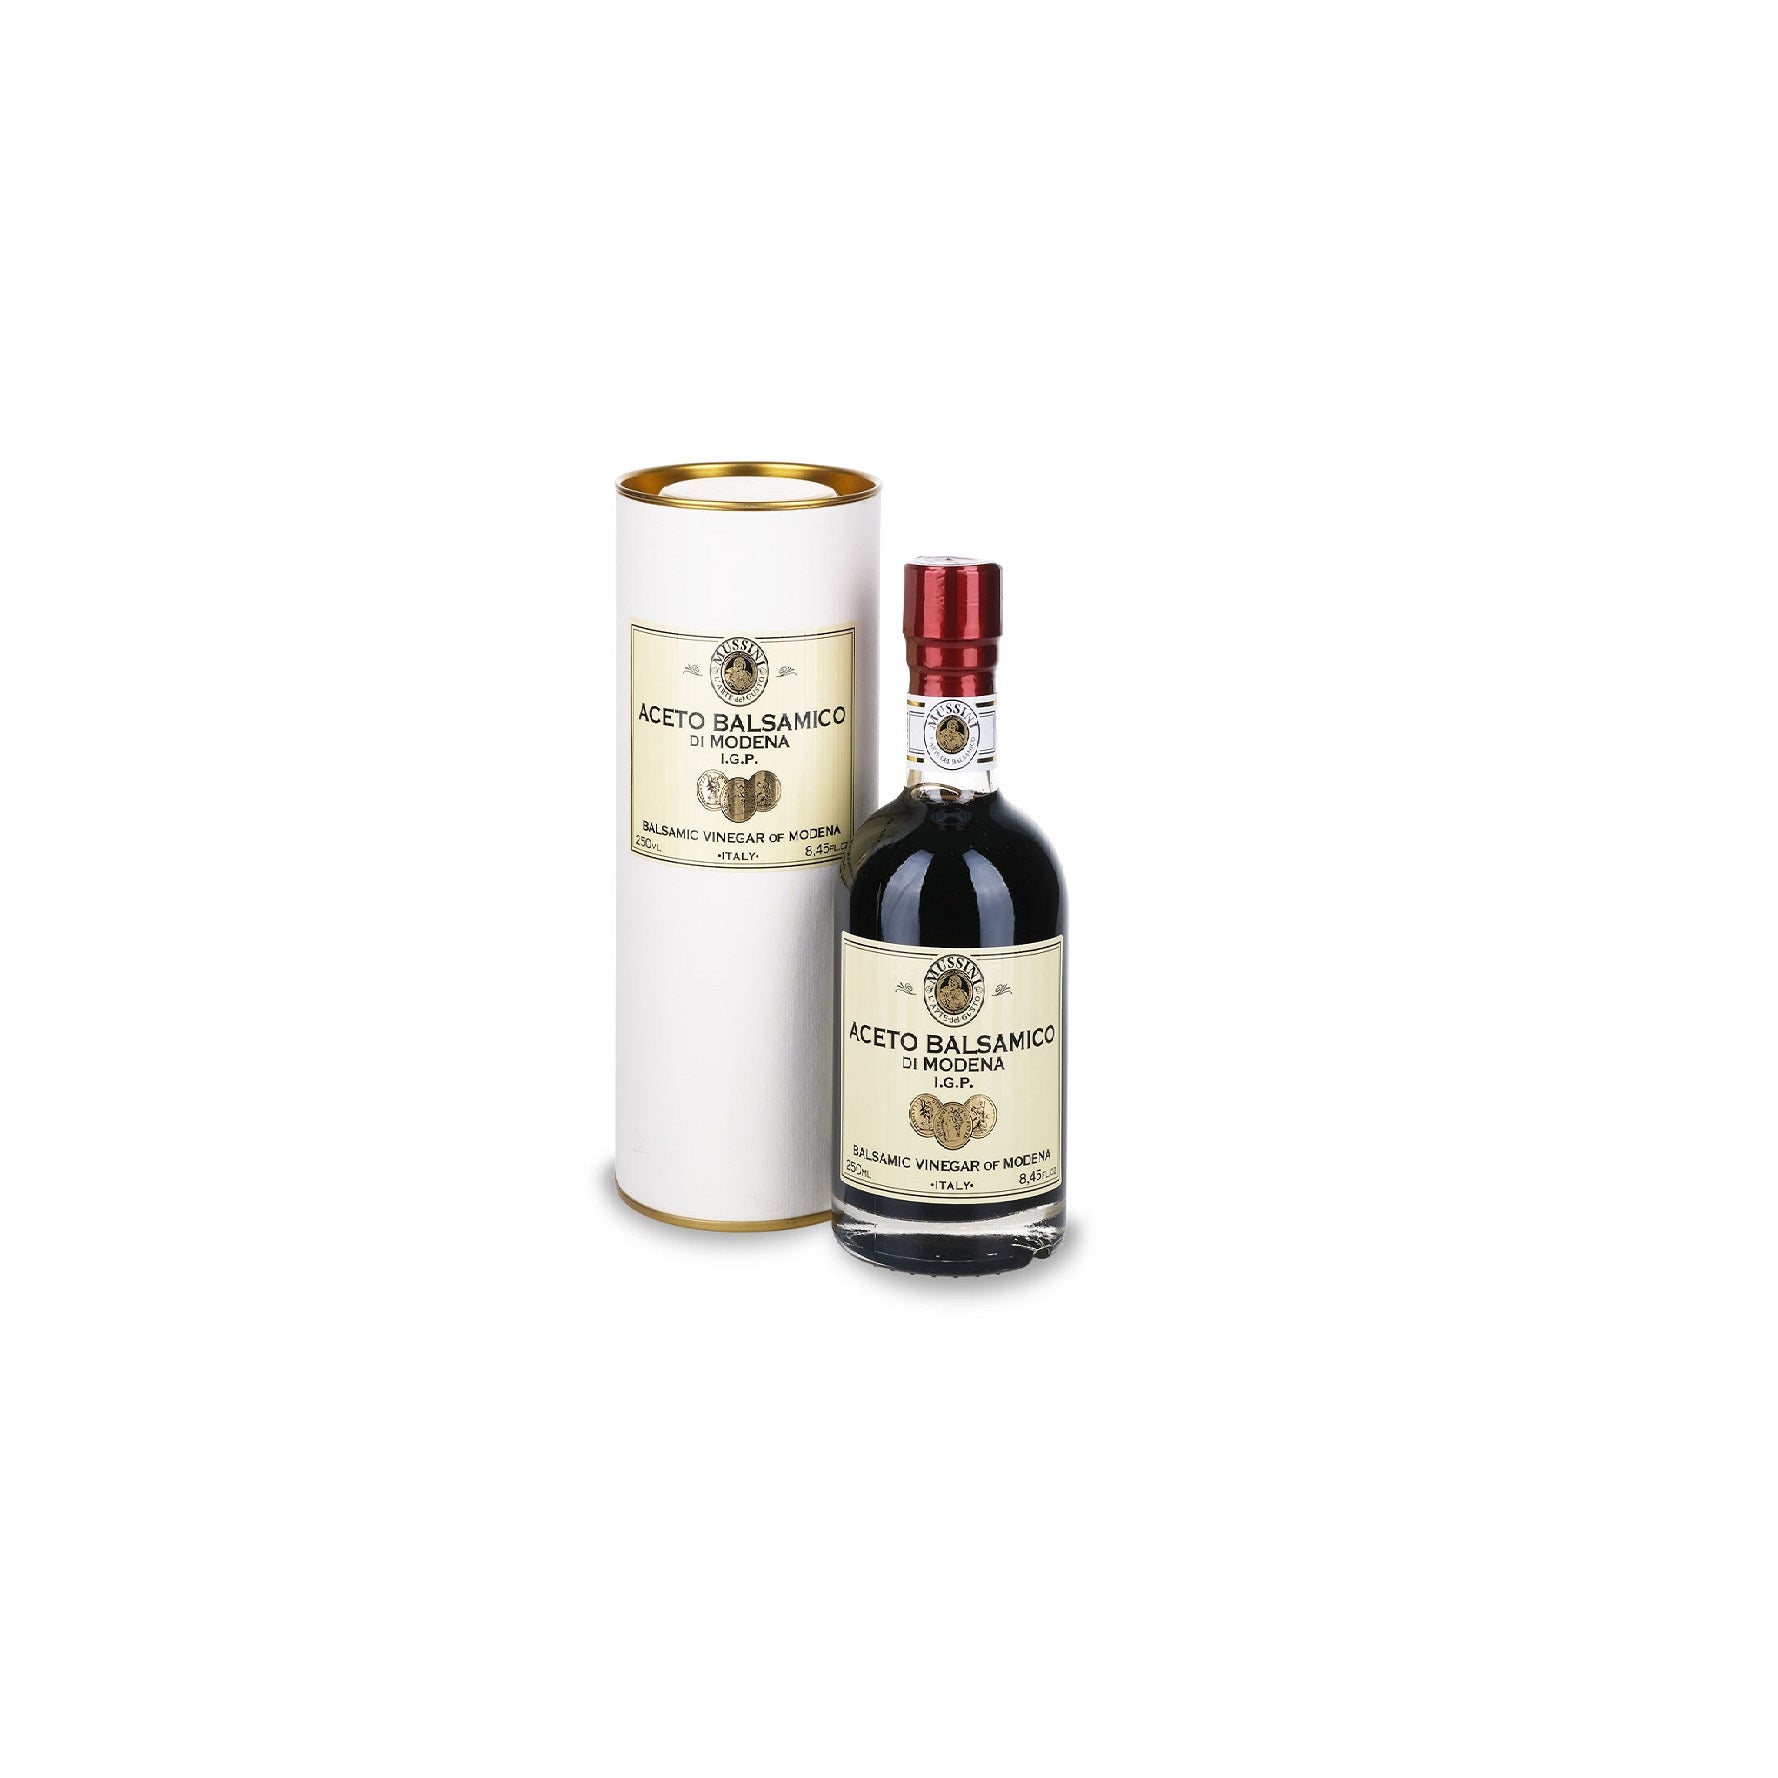 Balsamic Vinegar from Modena "Mussini" "Red Seal"